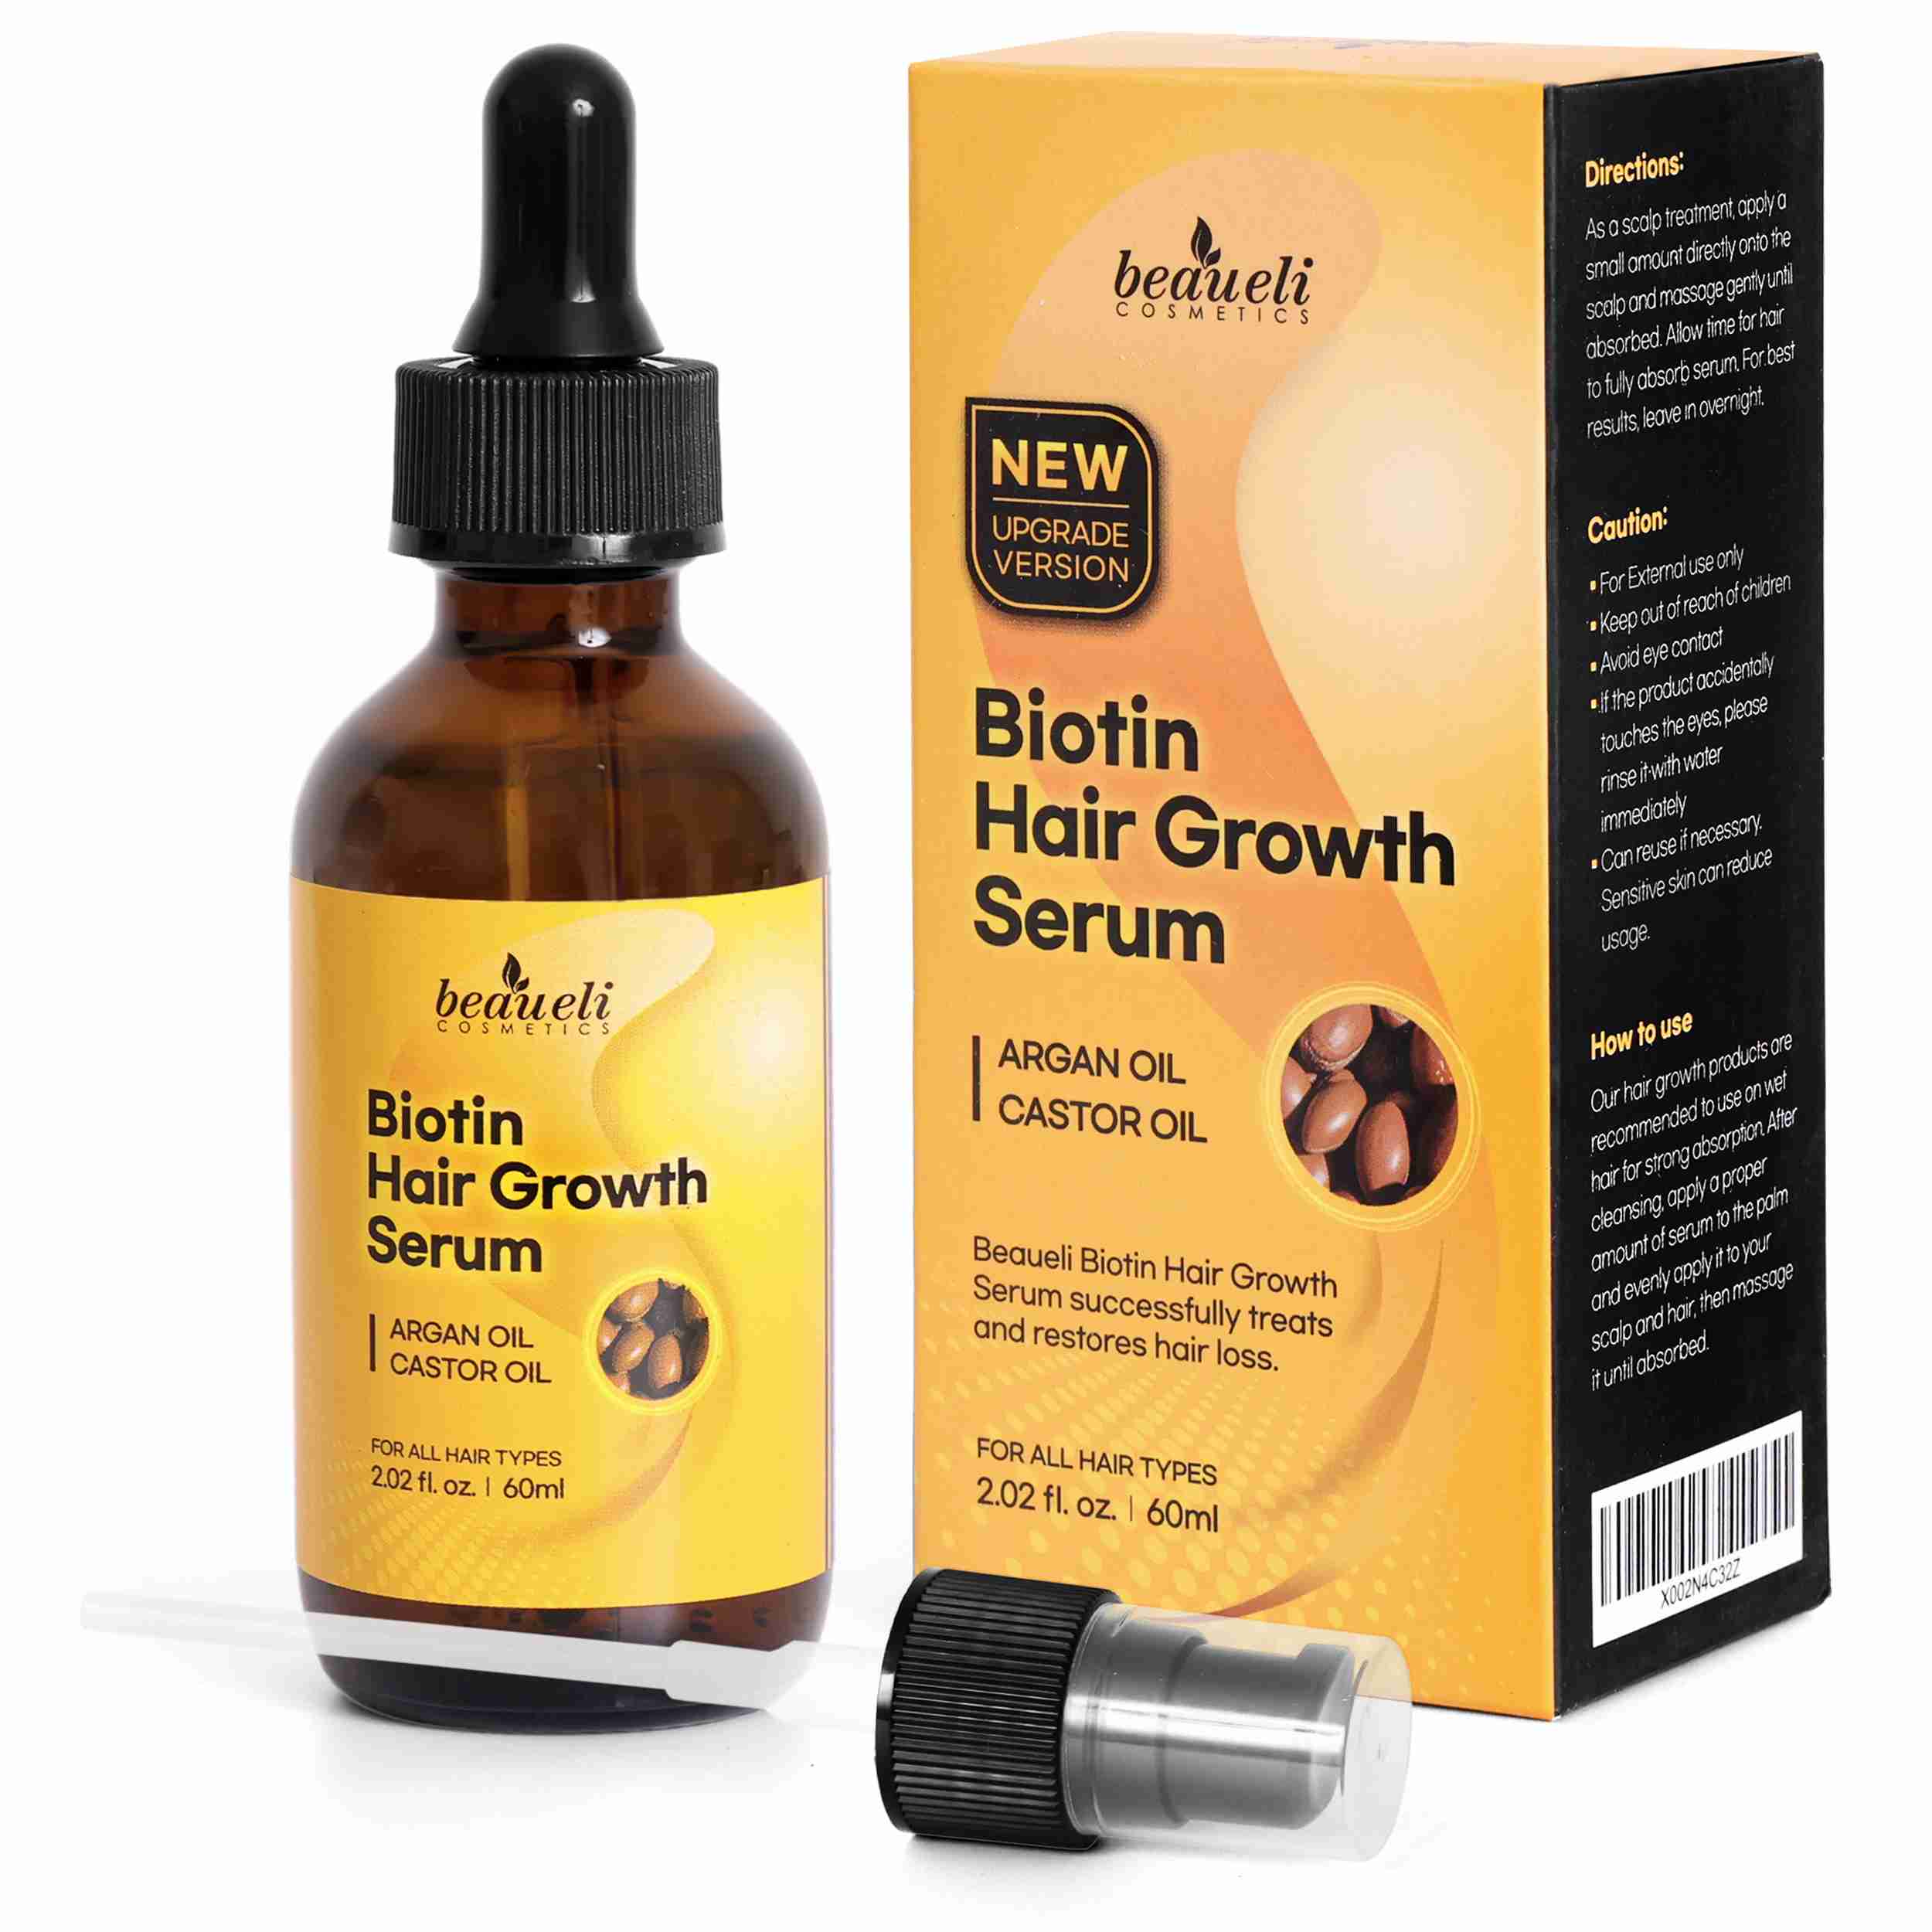 biotin-hair-growth-serum with cash back rebate